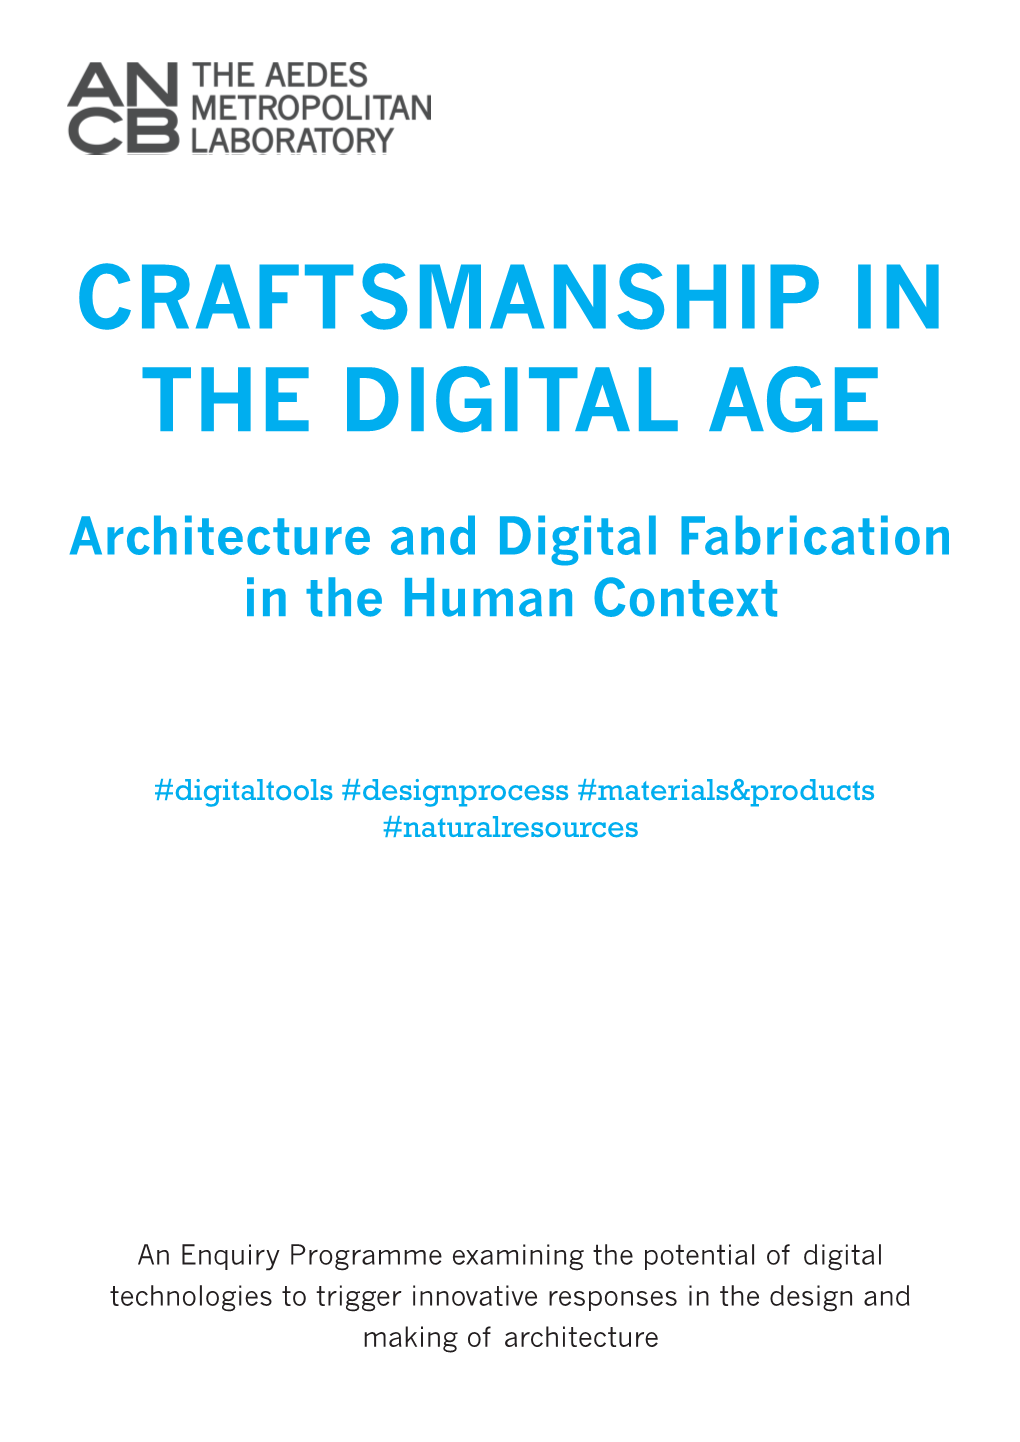 Craftsmanship in the Digital Age